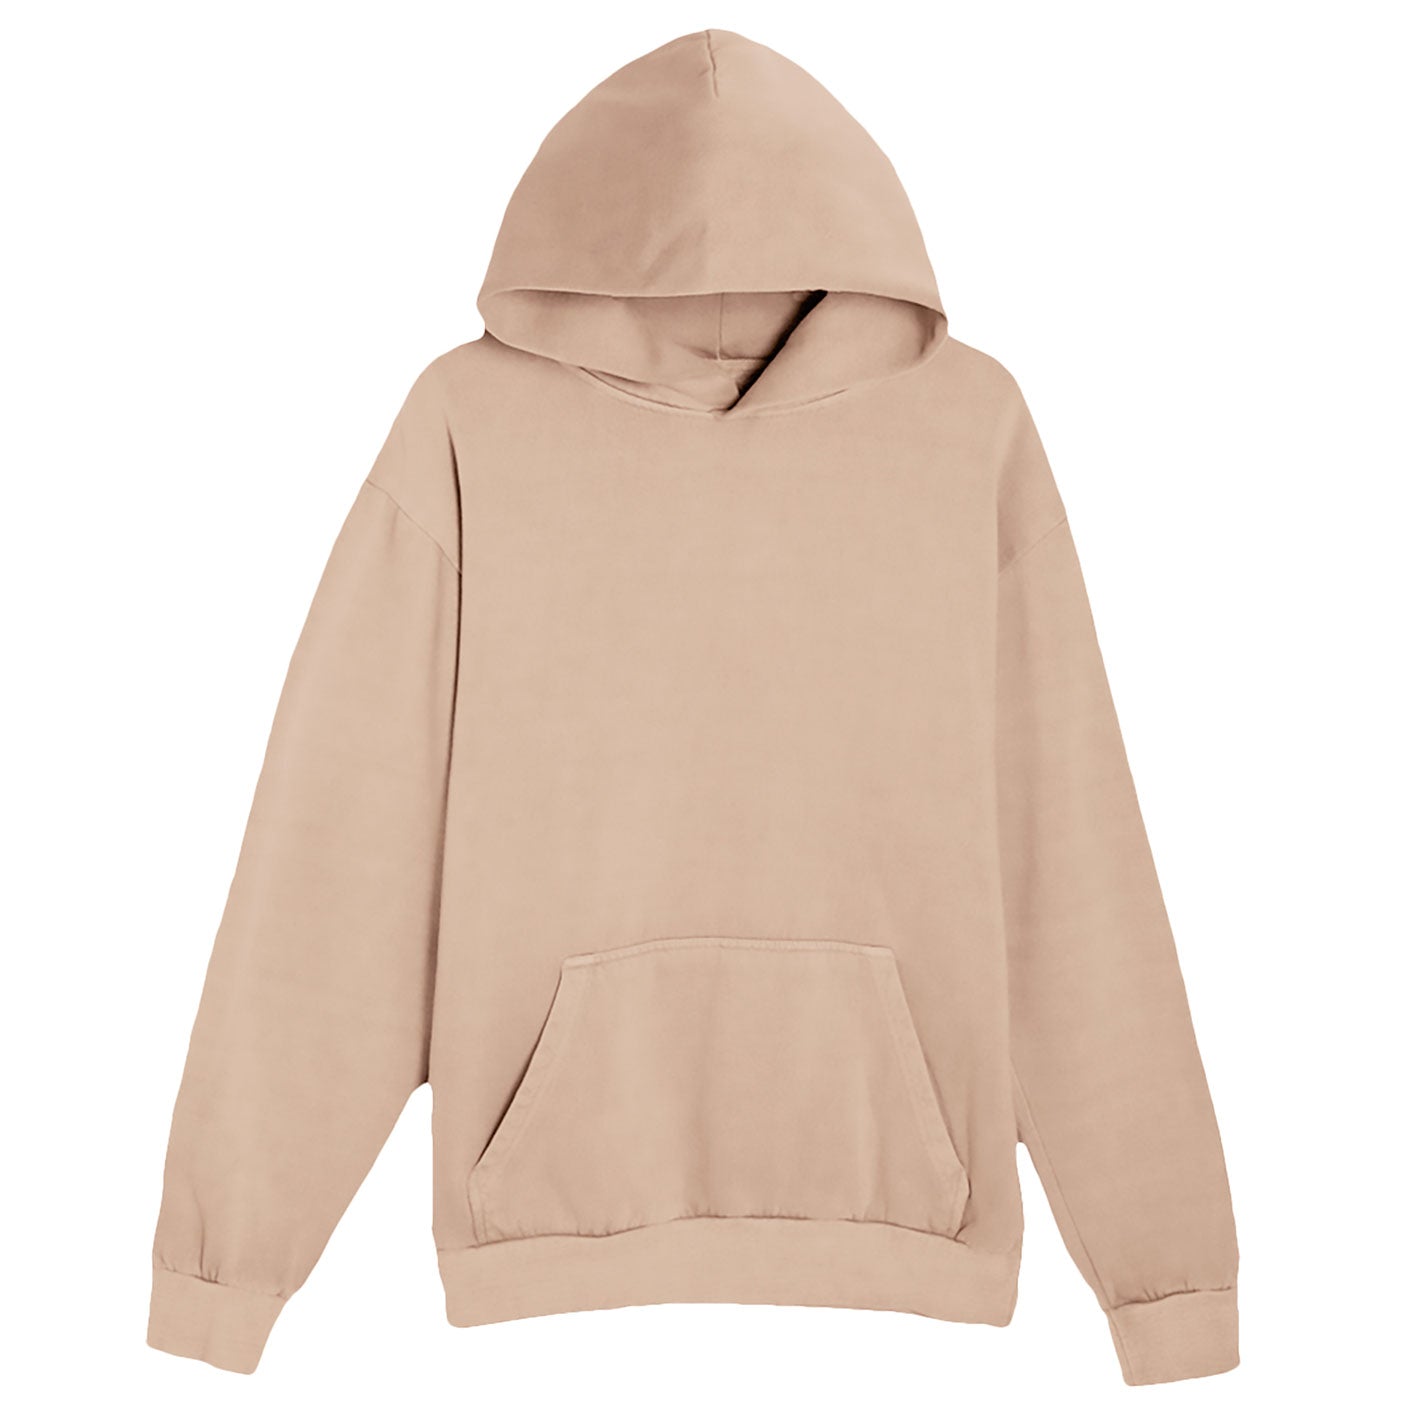 custom design hoodie no minimum your design or logo tan